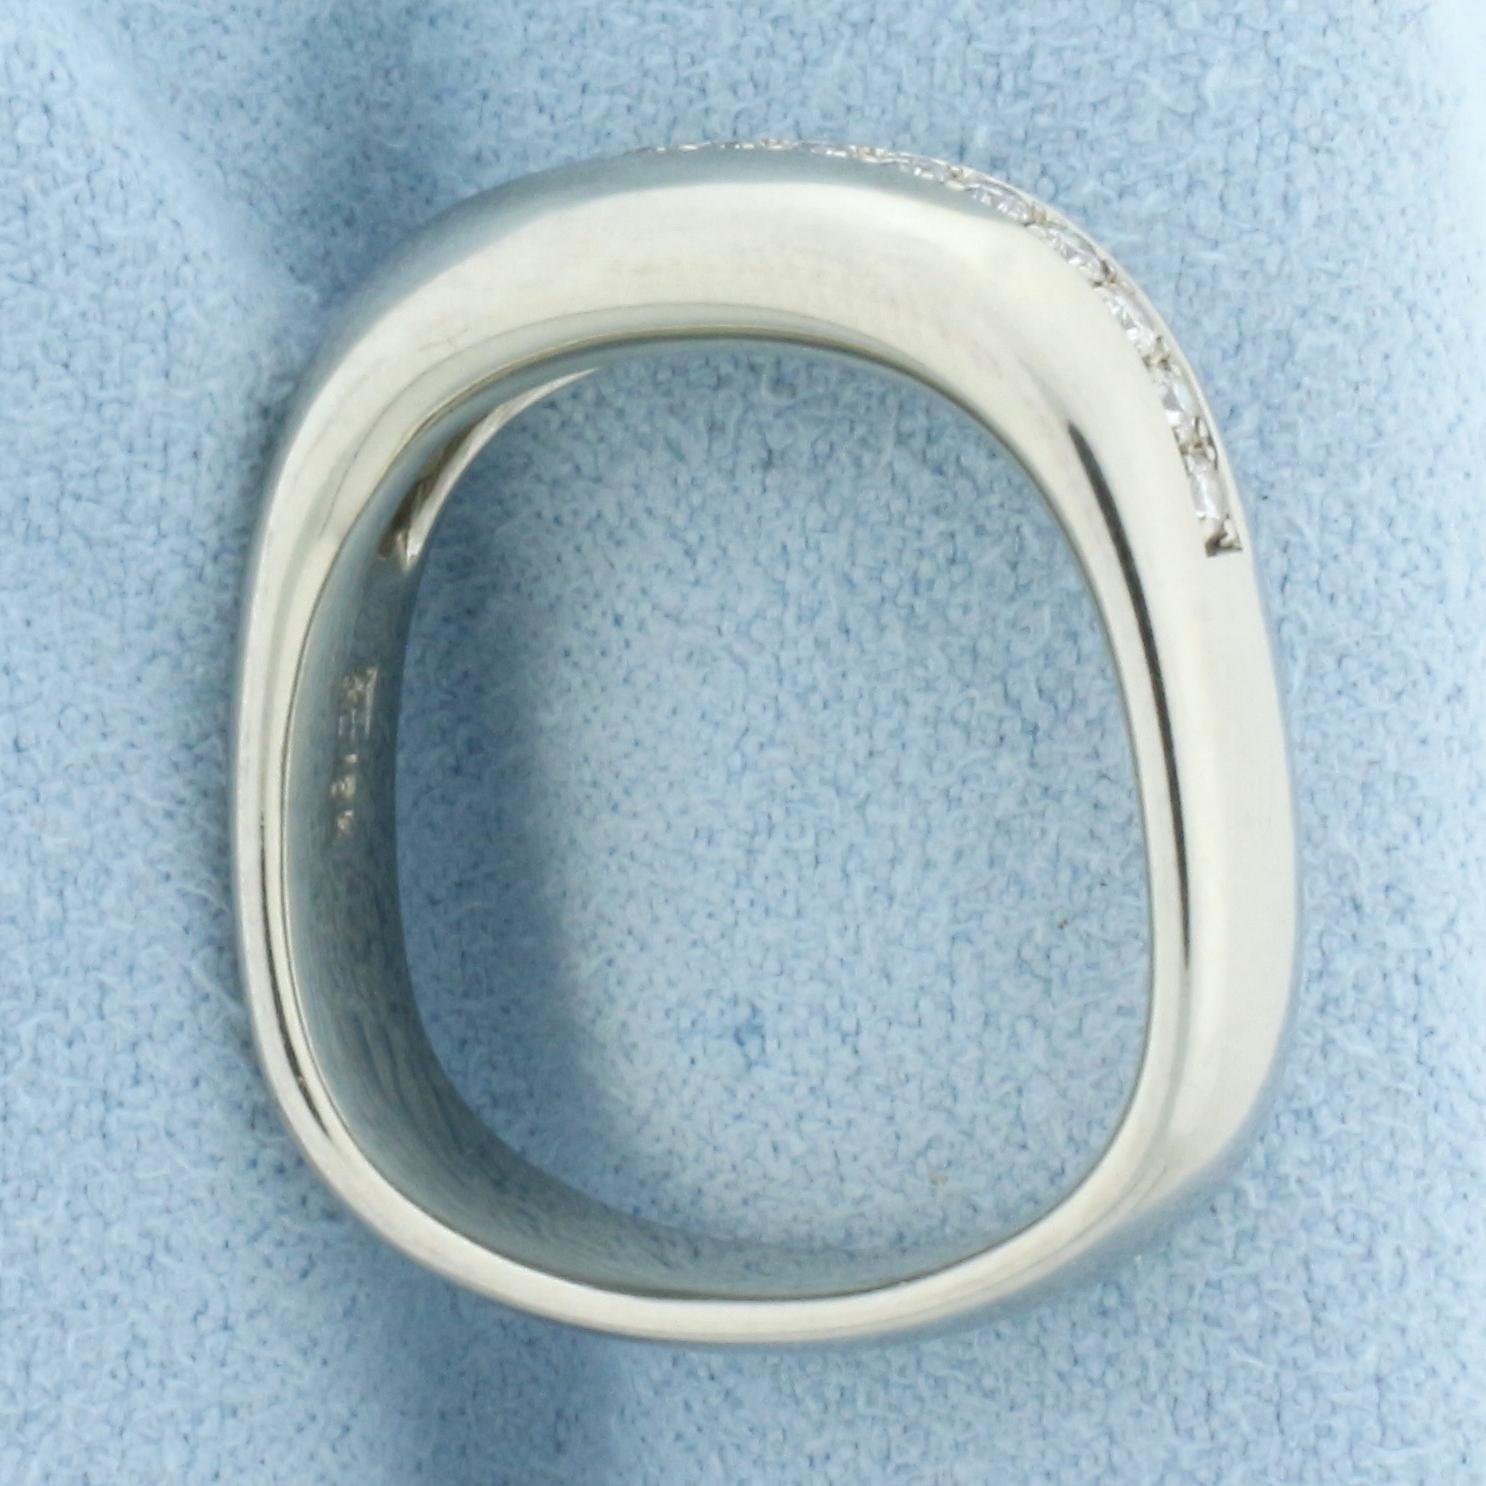 Jean-francois Albert Diamond Line Ring In 18k White Gold